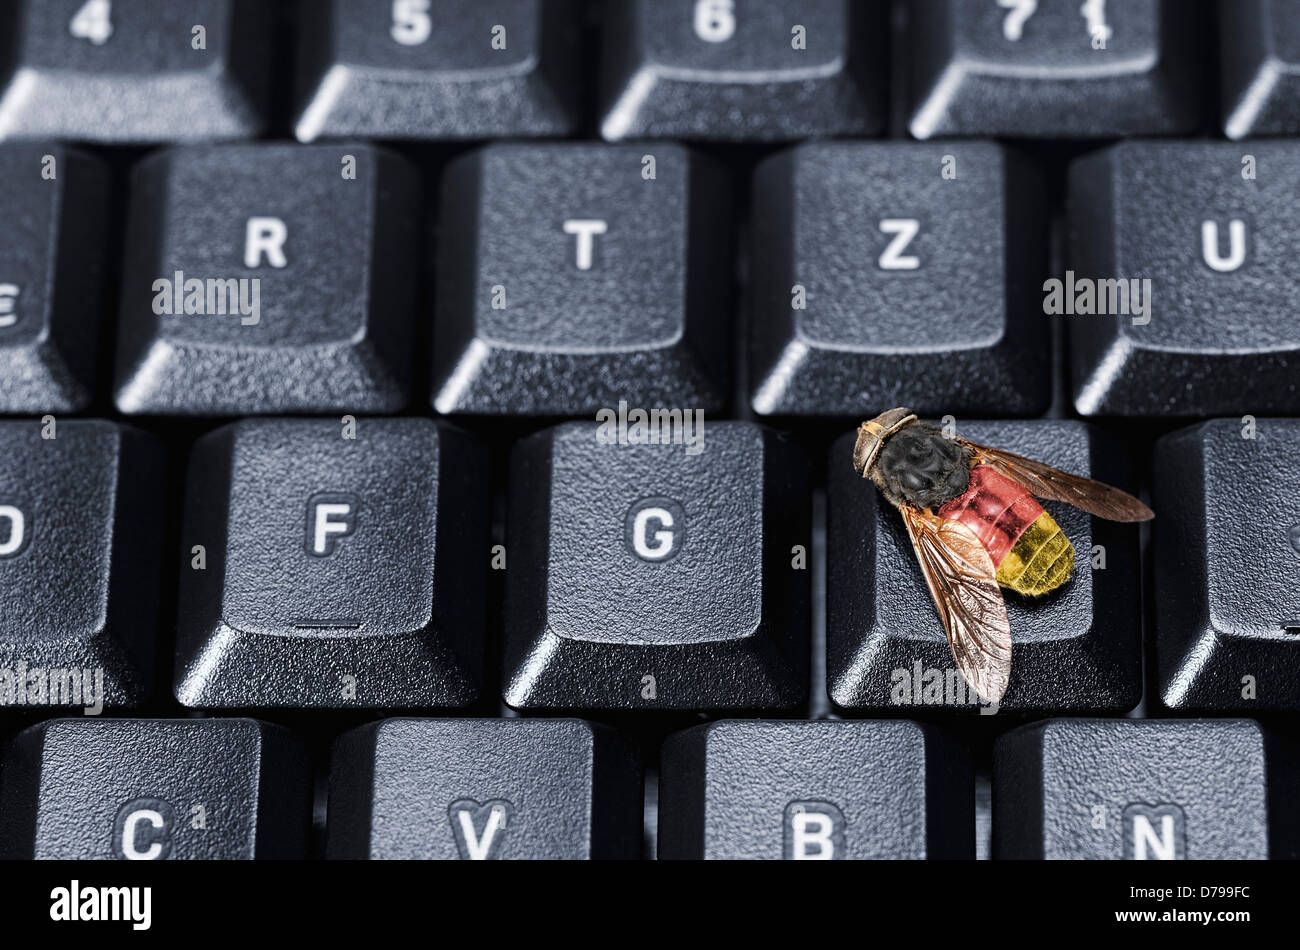 Fly on computer keyboard, symbolic photo federal Trojan , Fliege auf Computertastatur, Symbolfoto Bundestrojaner Stock Photo